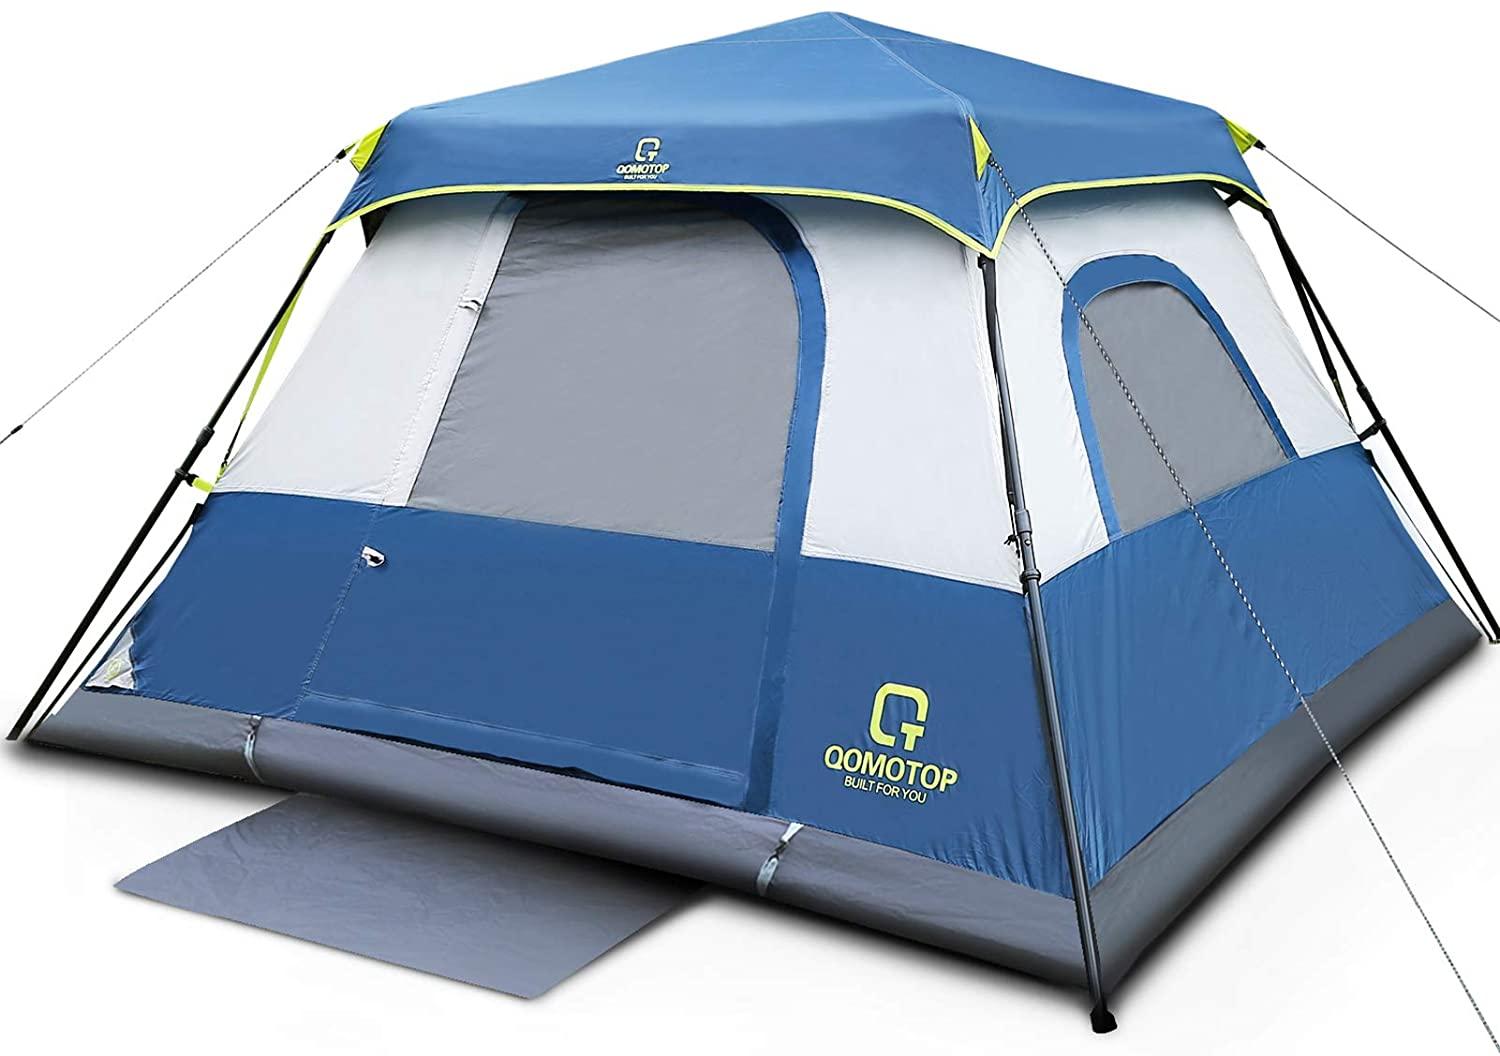 OT Qomotop 60 Second Setup Tent for $111.97 Shipped